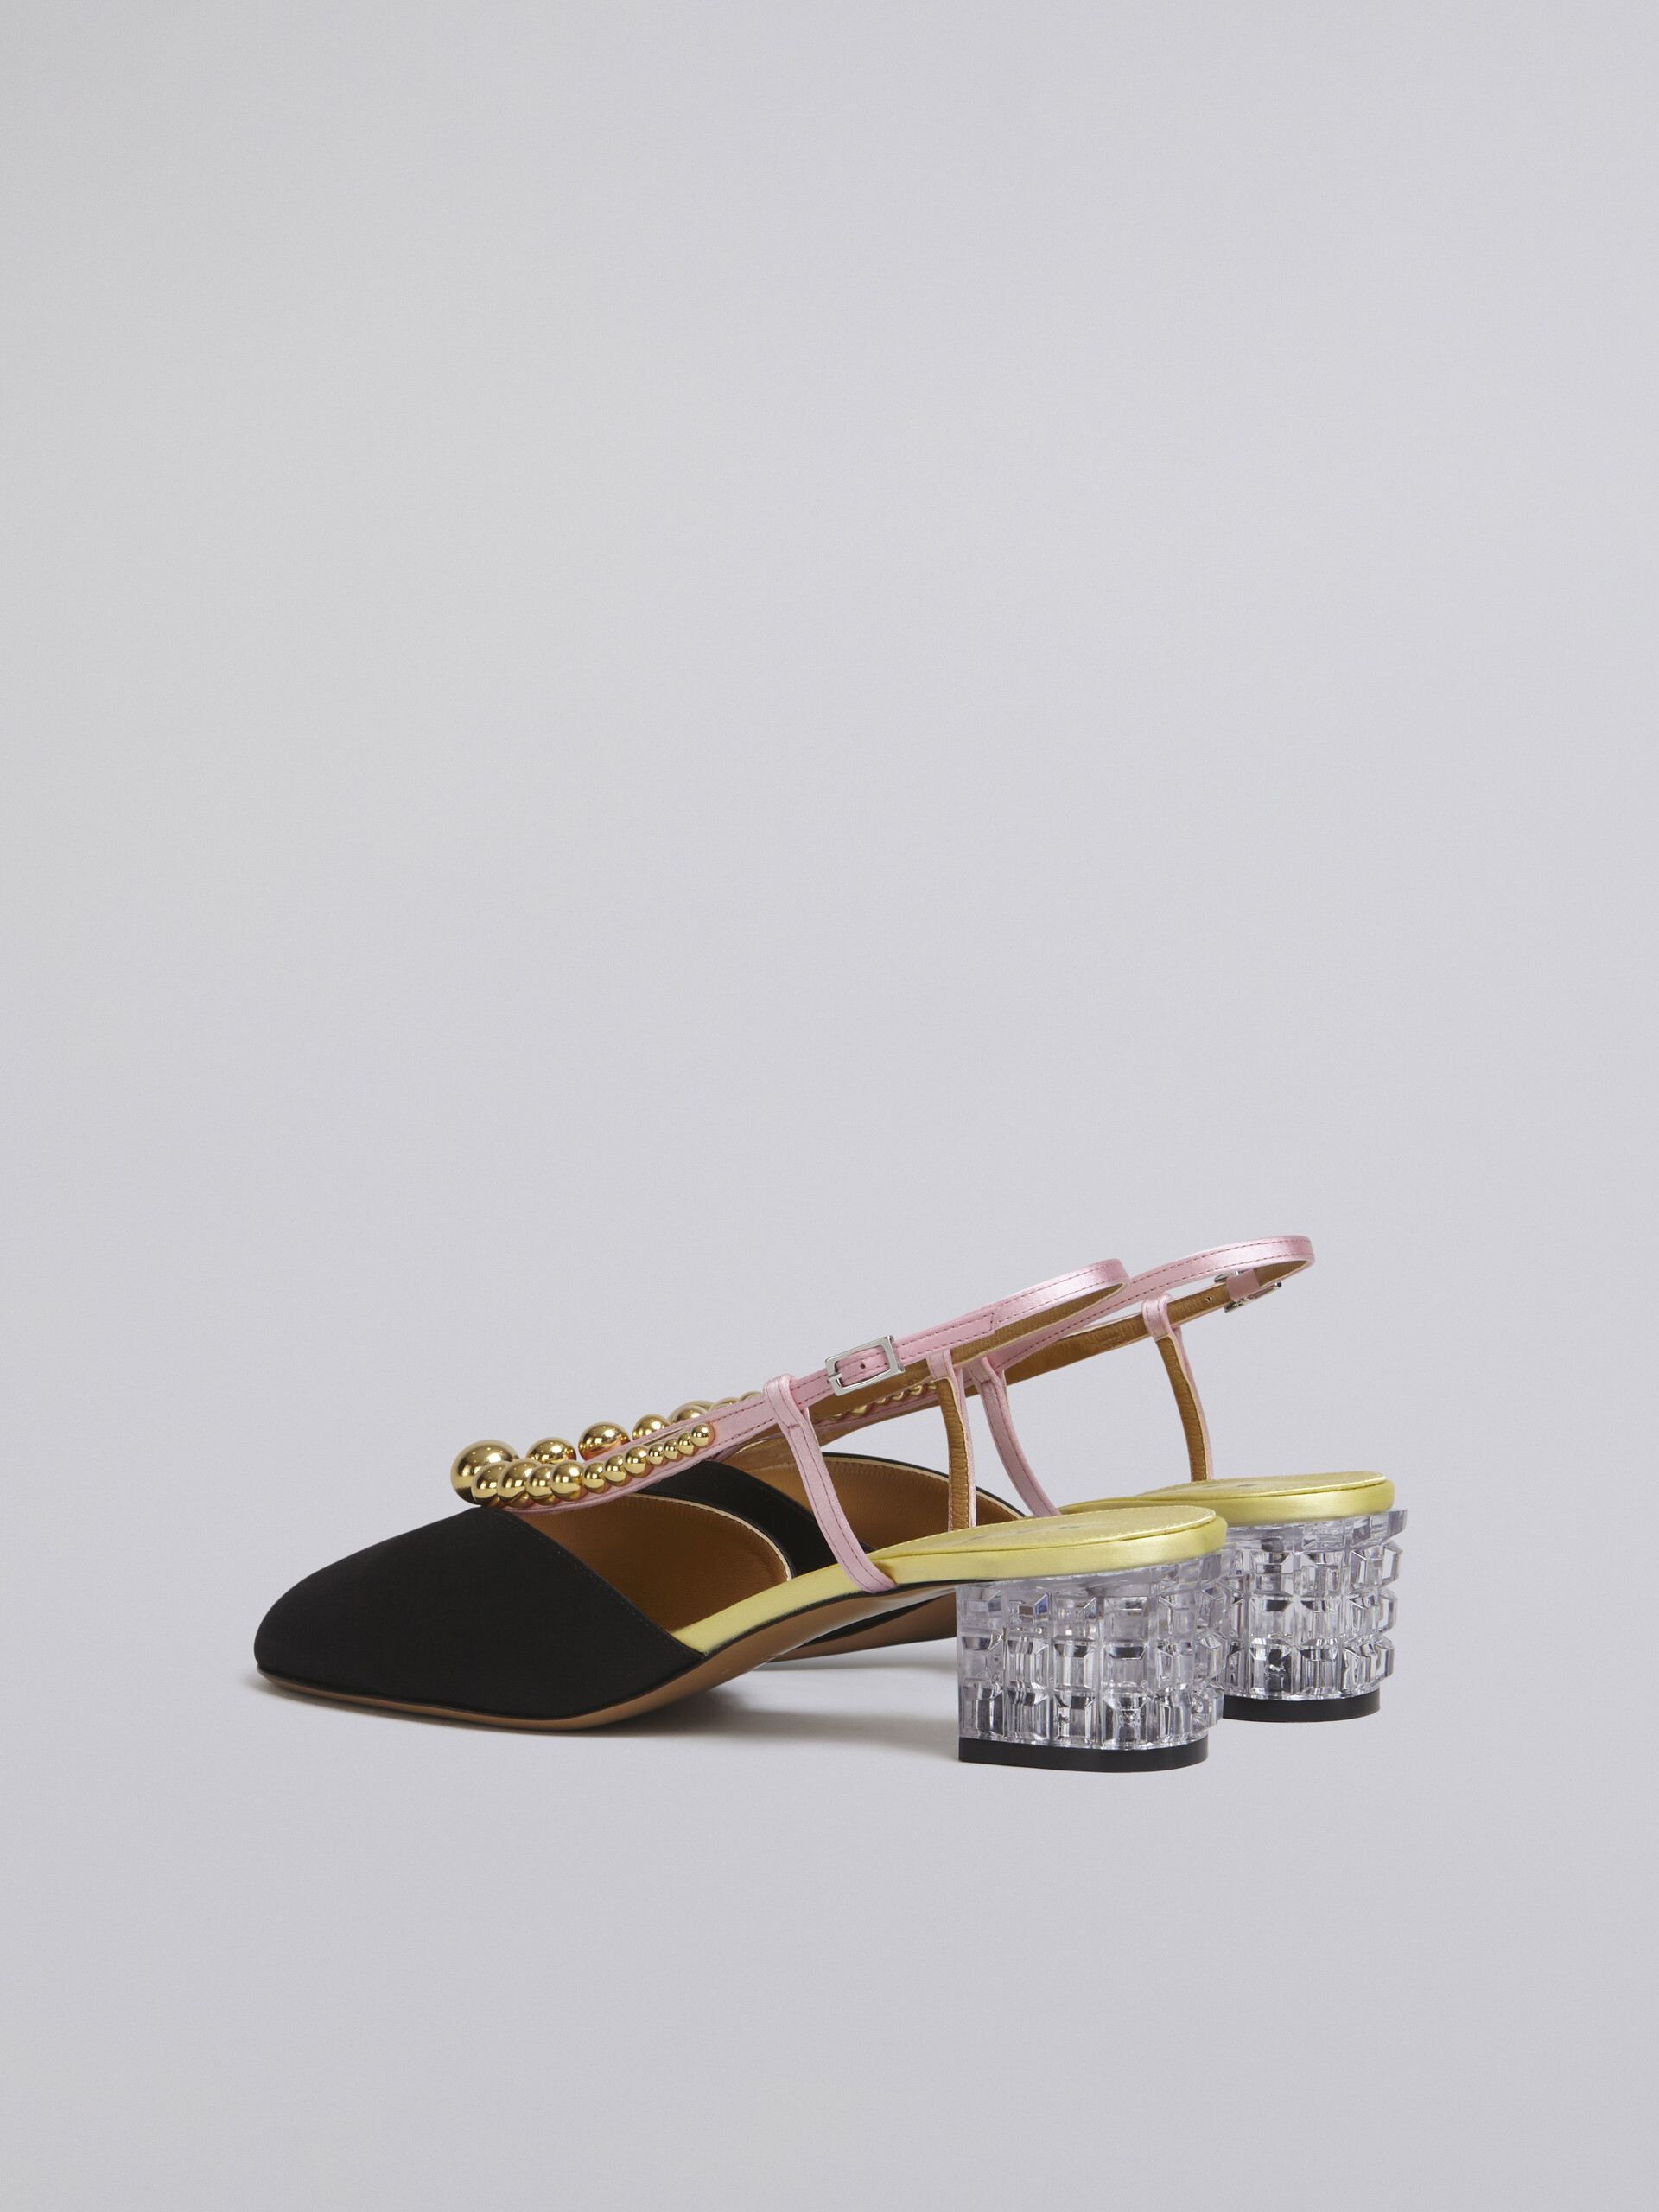 Silk satin pump with sculpted heel in transparent plexiglass - Sandals - Image 3